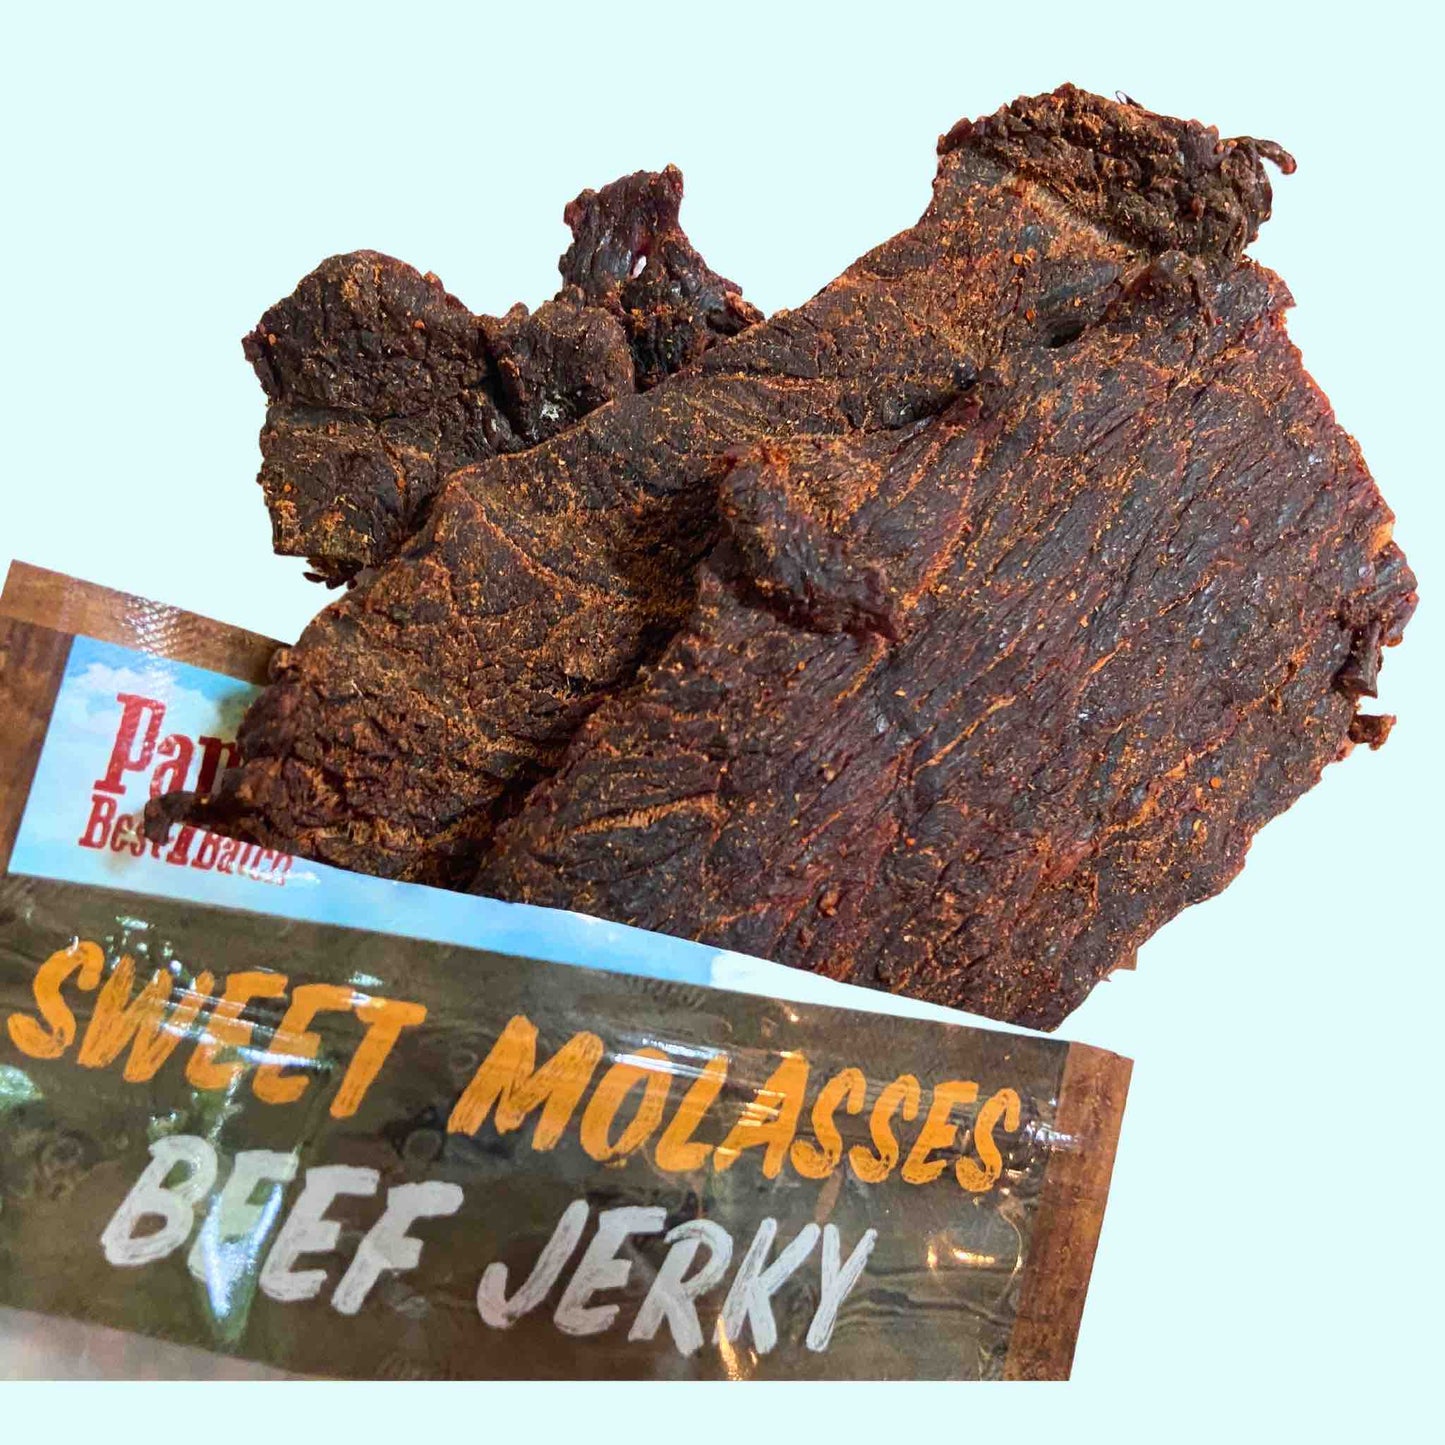 Sweet Molasses Beef Jerky